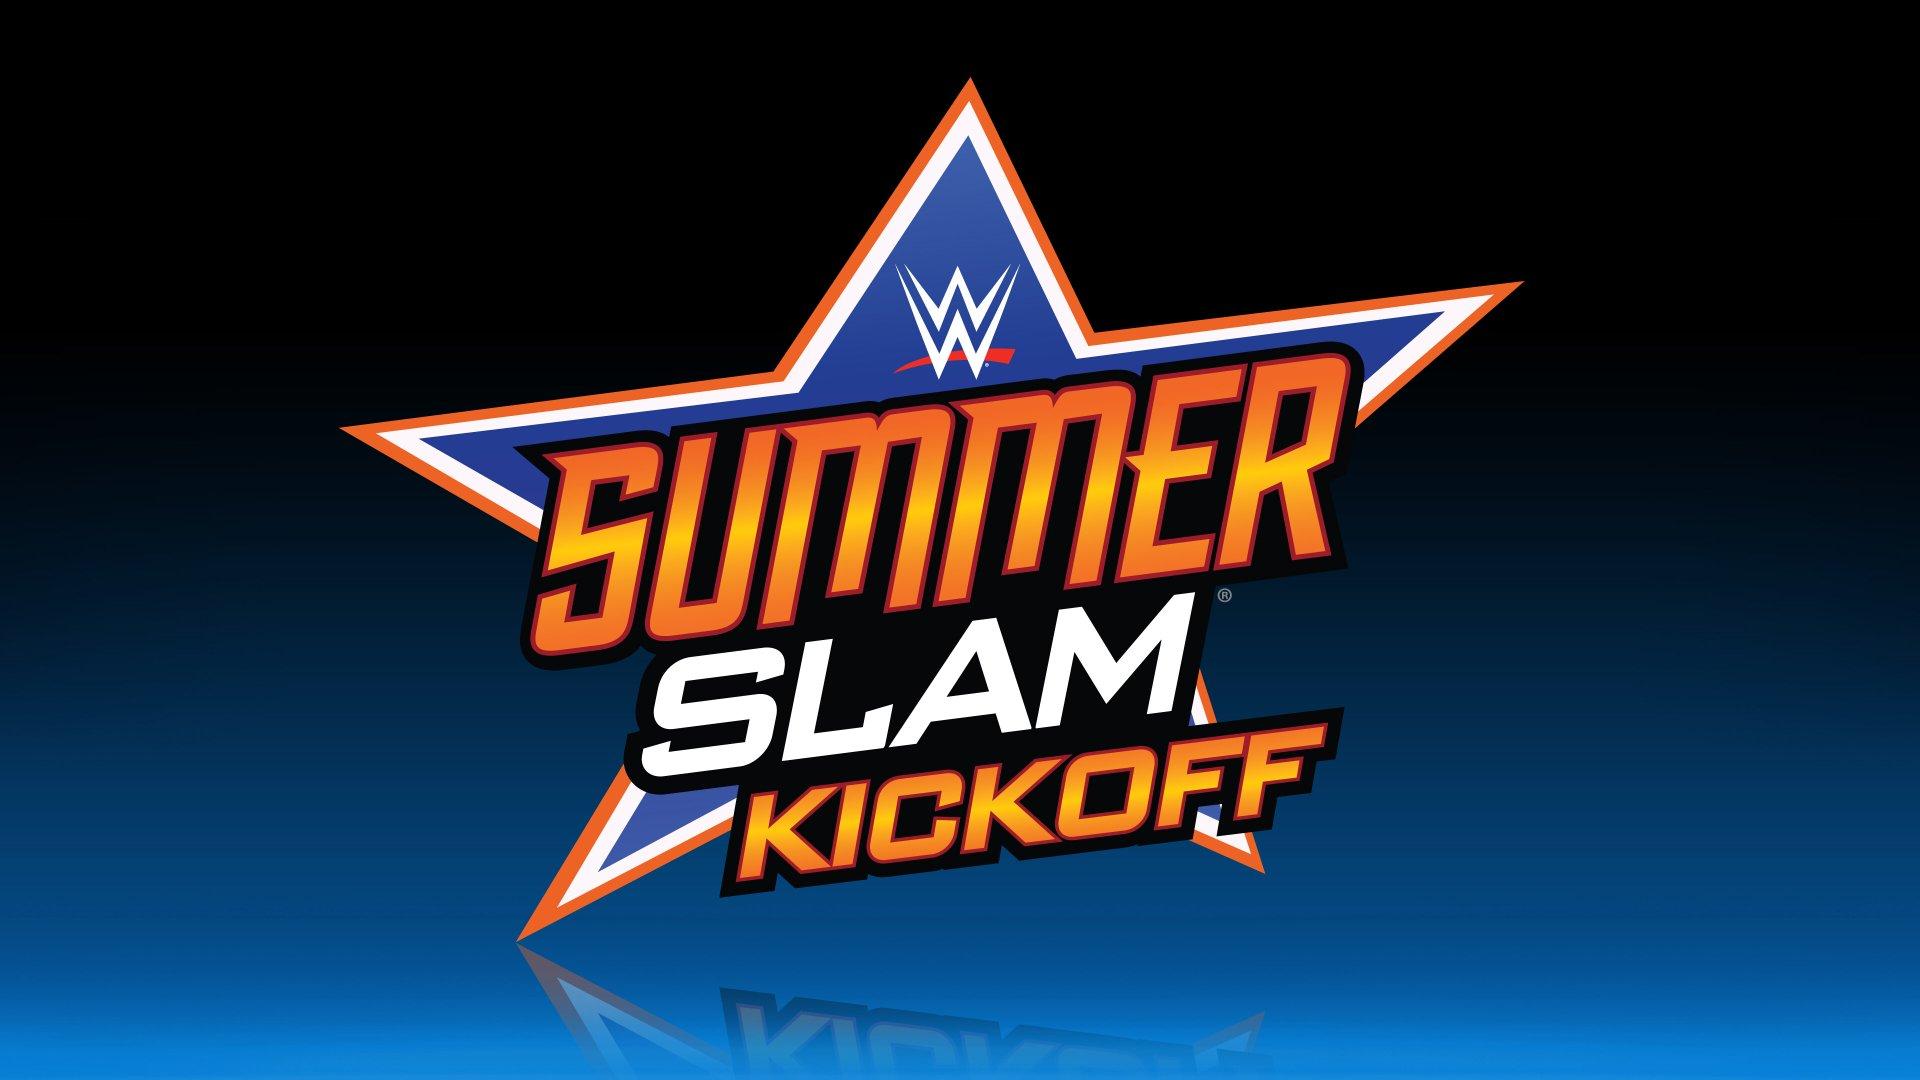 WWE SummerSlam 2014 Kickoff